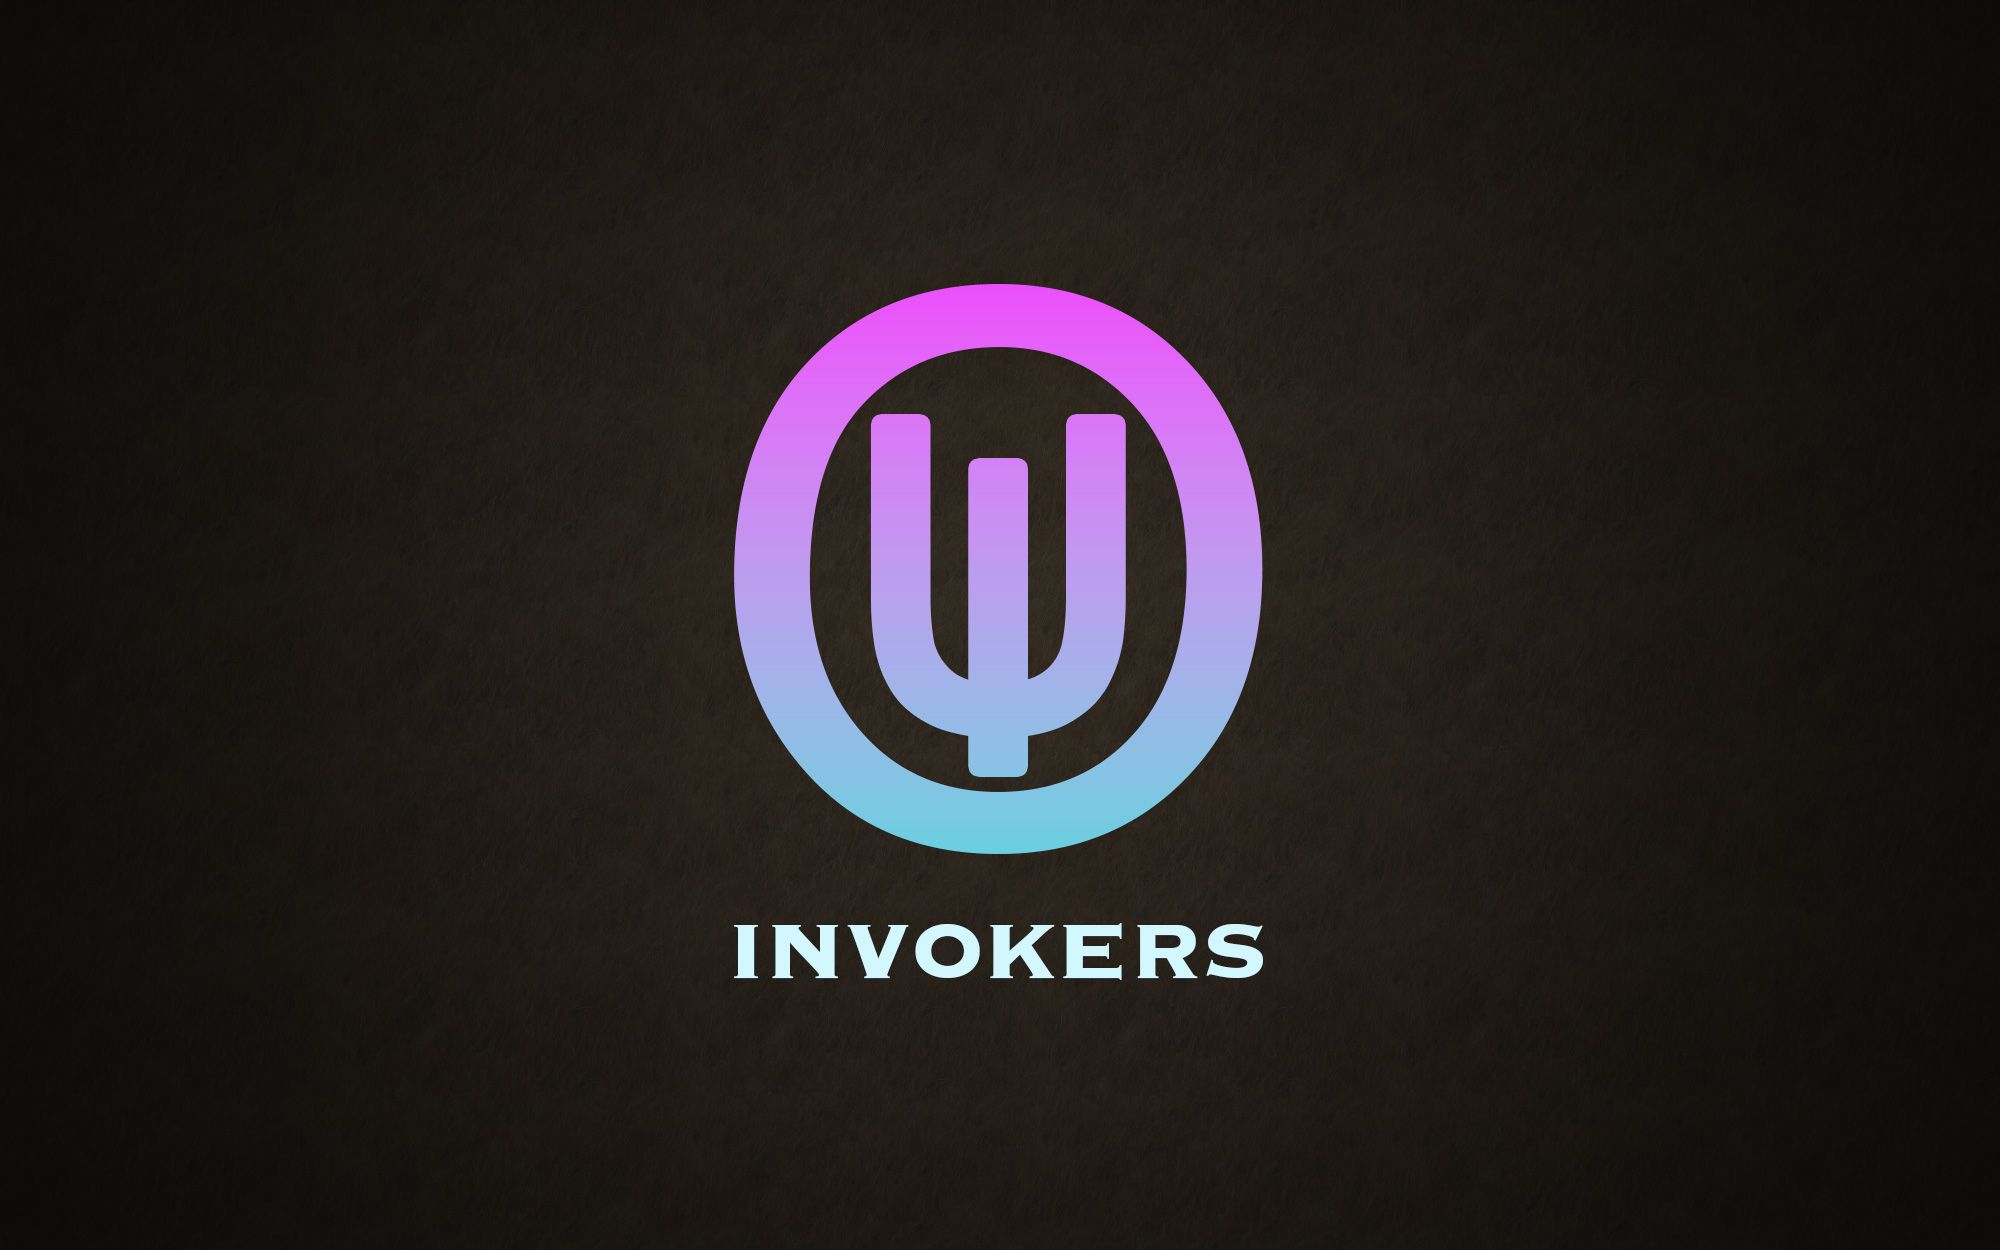 Open UI logo with text invokers below it